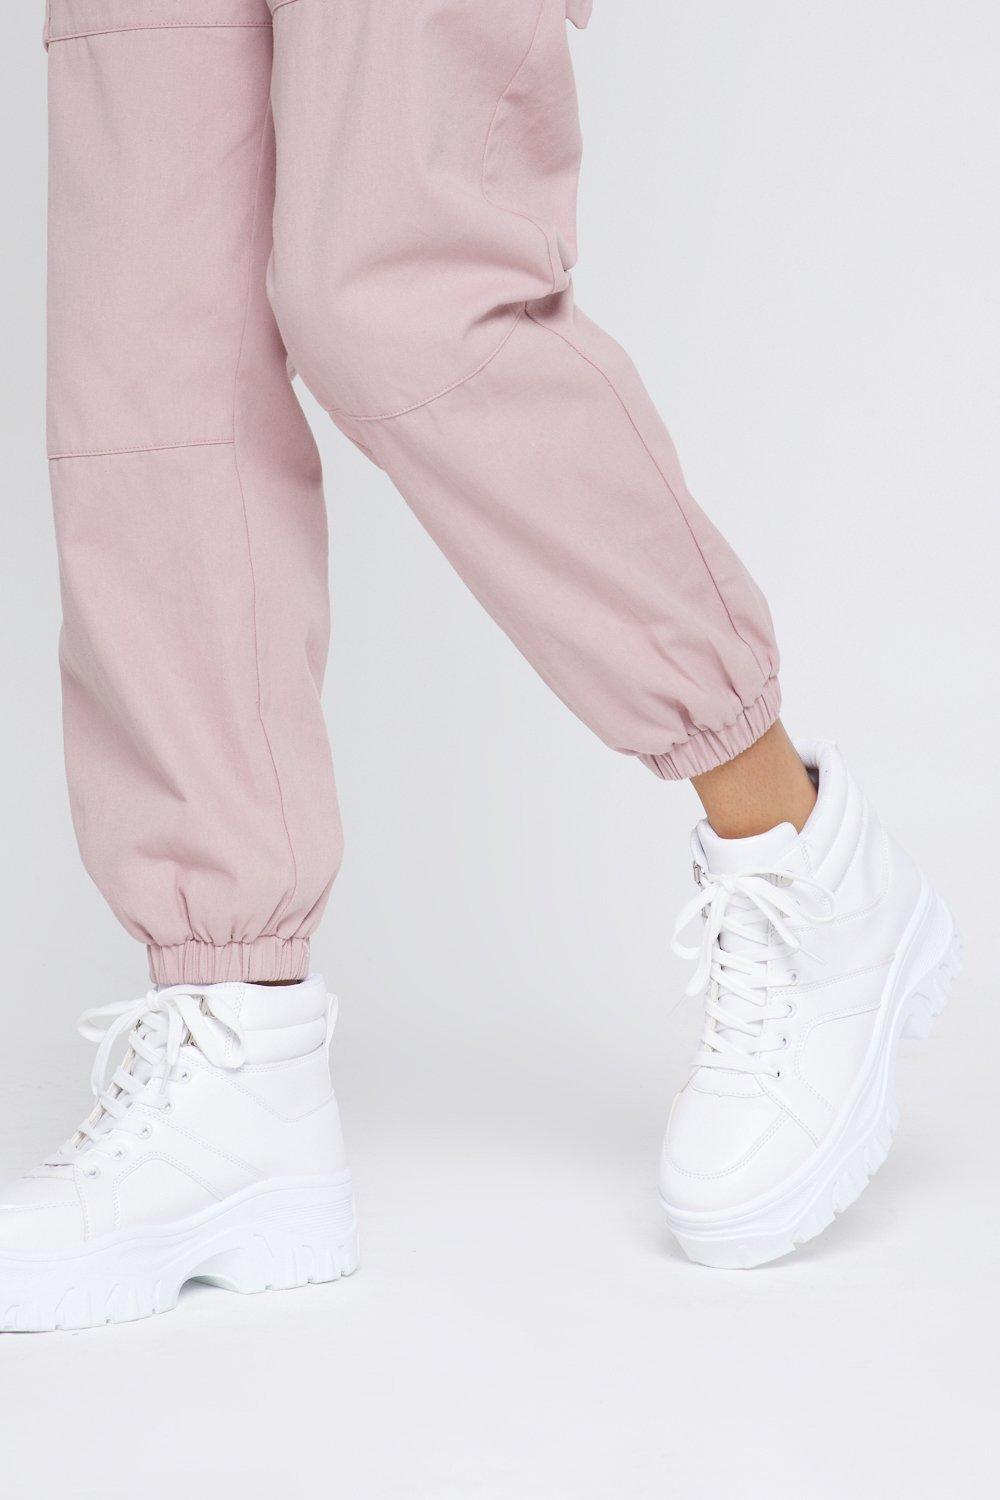 chunky sneakers white